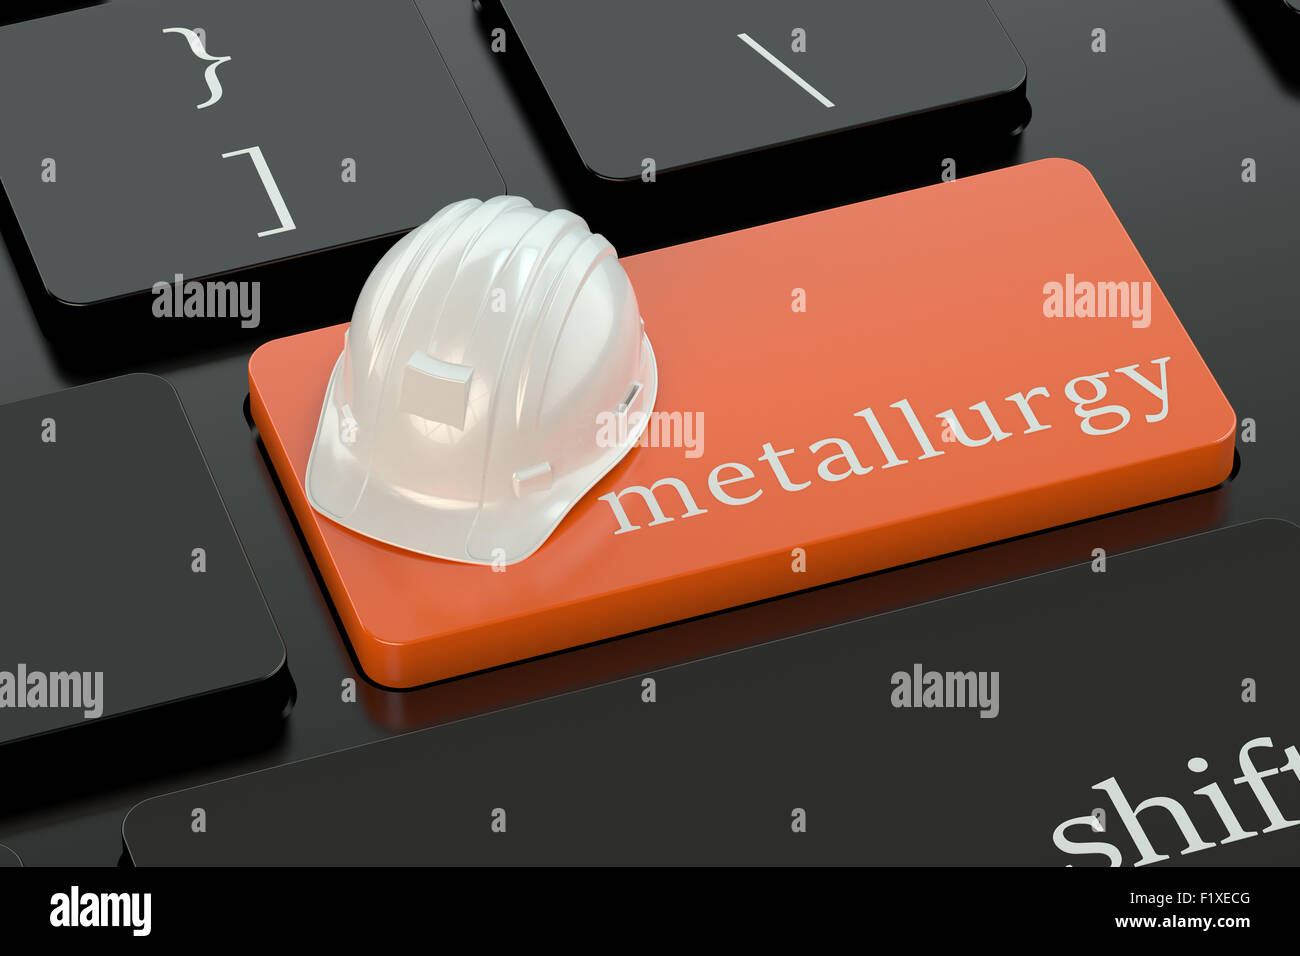 Metallurgie-Konzept auf orange Taste Stockfoto